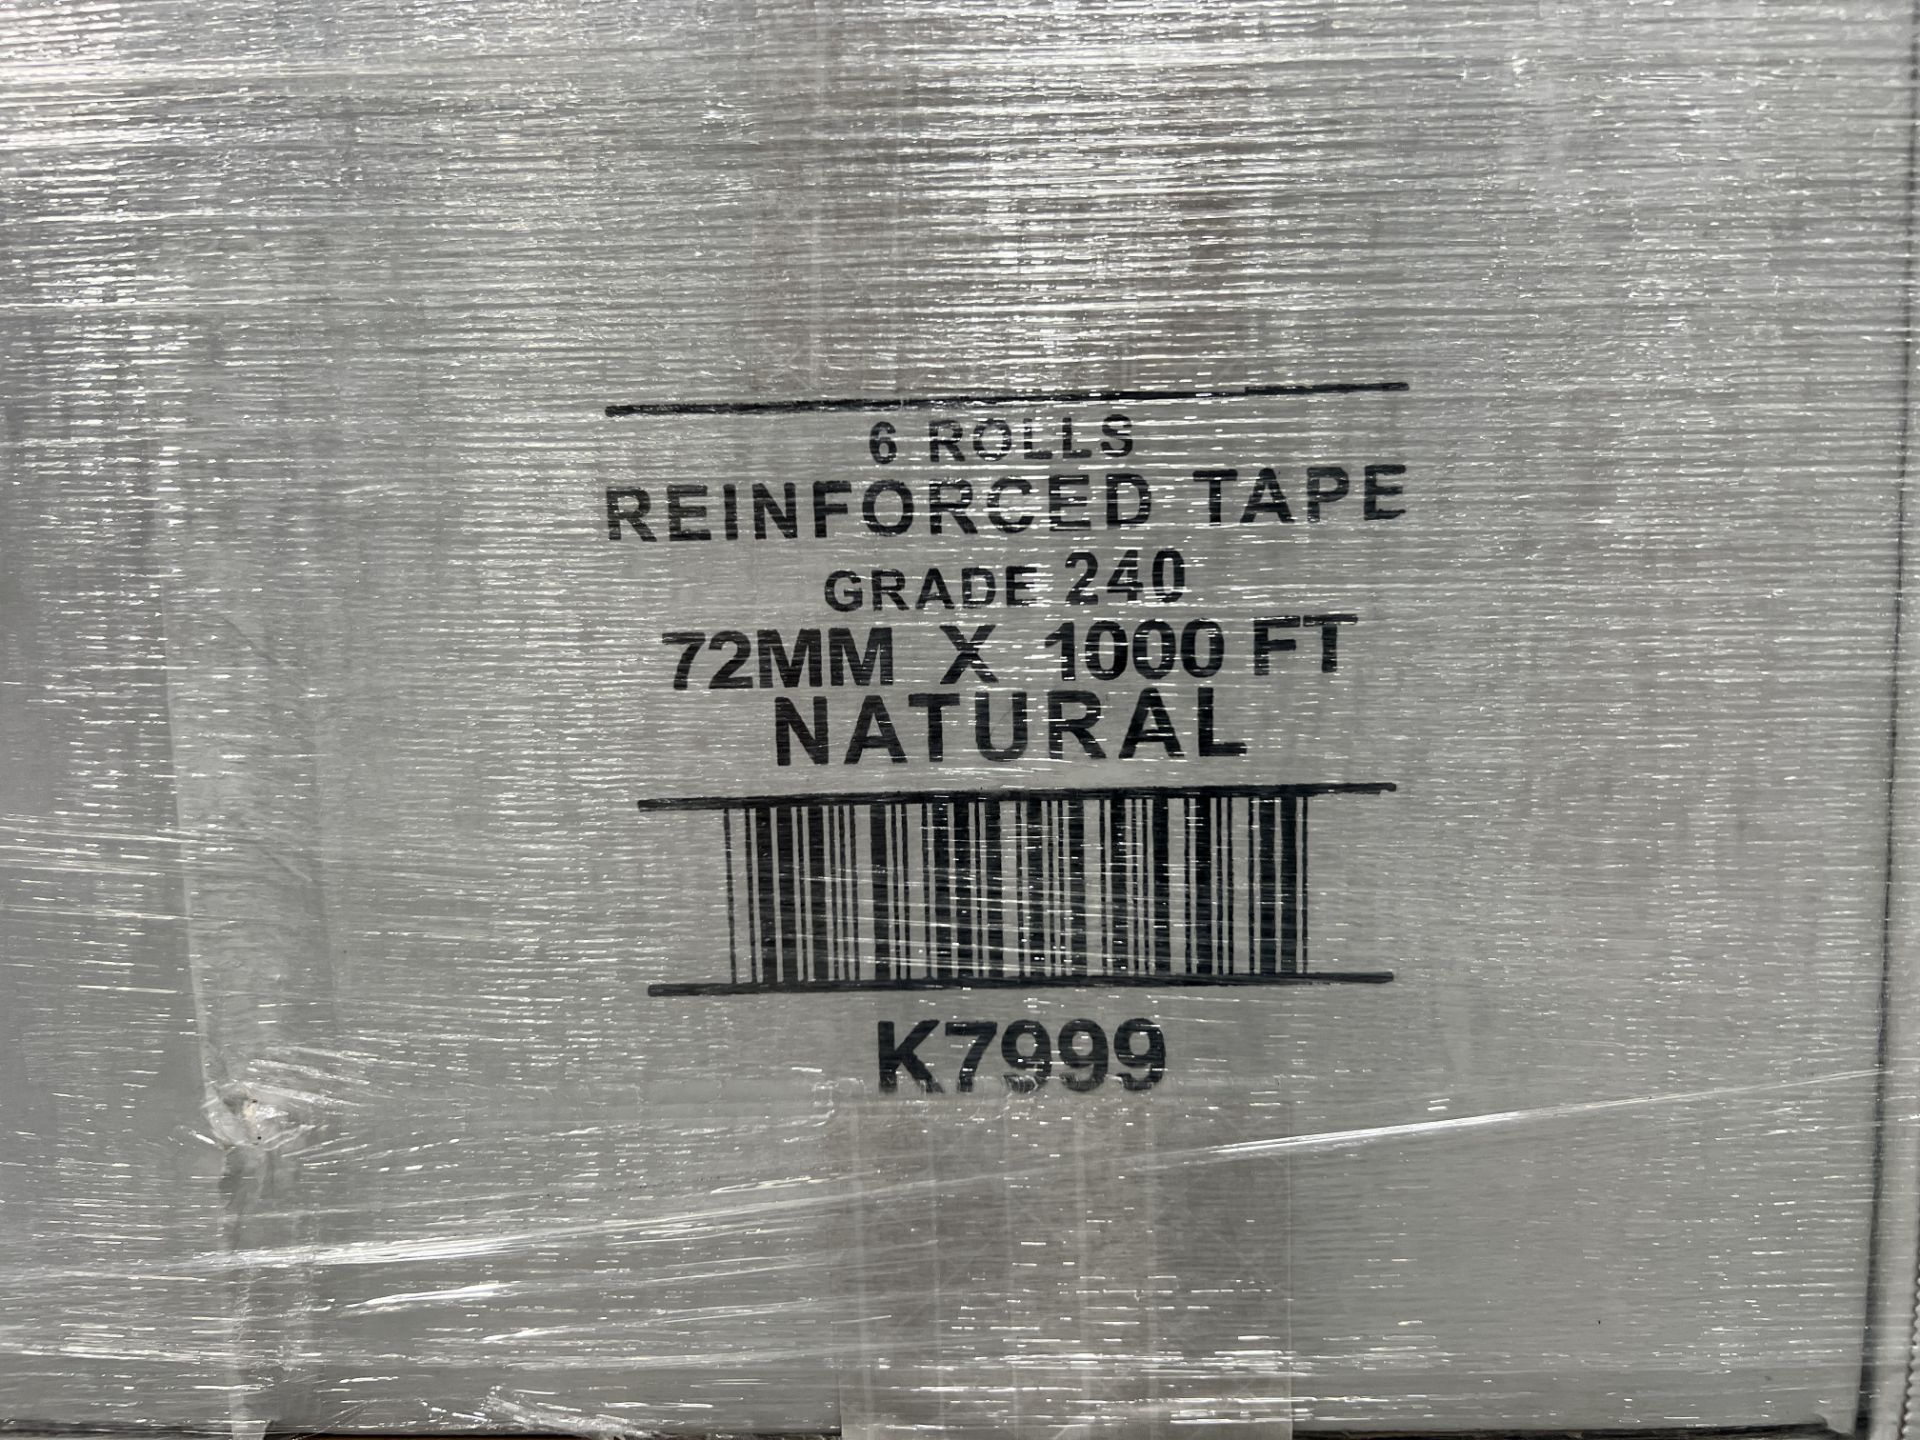 Reinforced Tape Grade 240 1000' Natural - Image 3 of 7